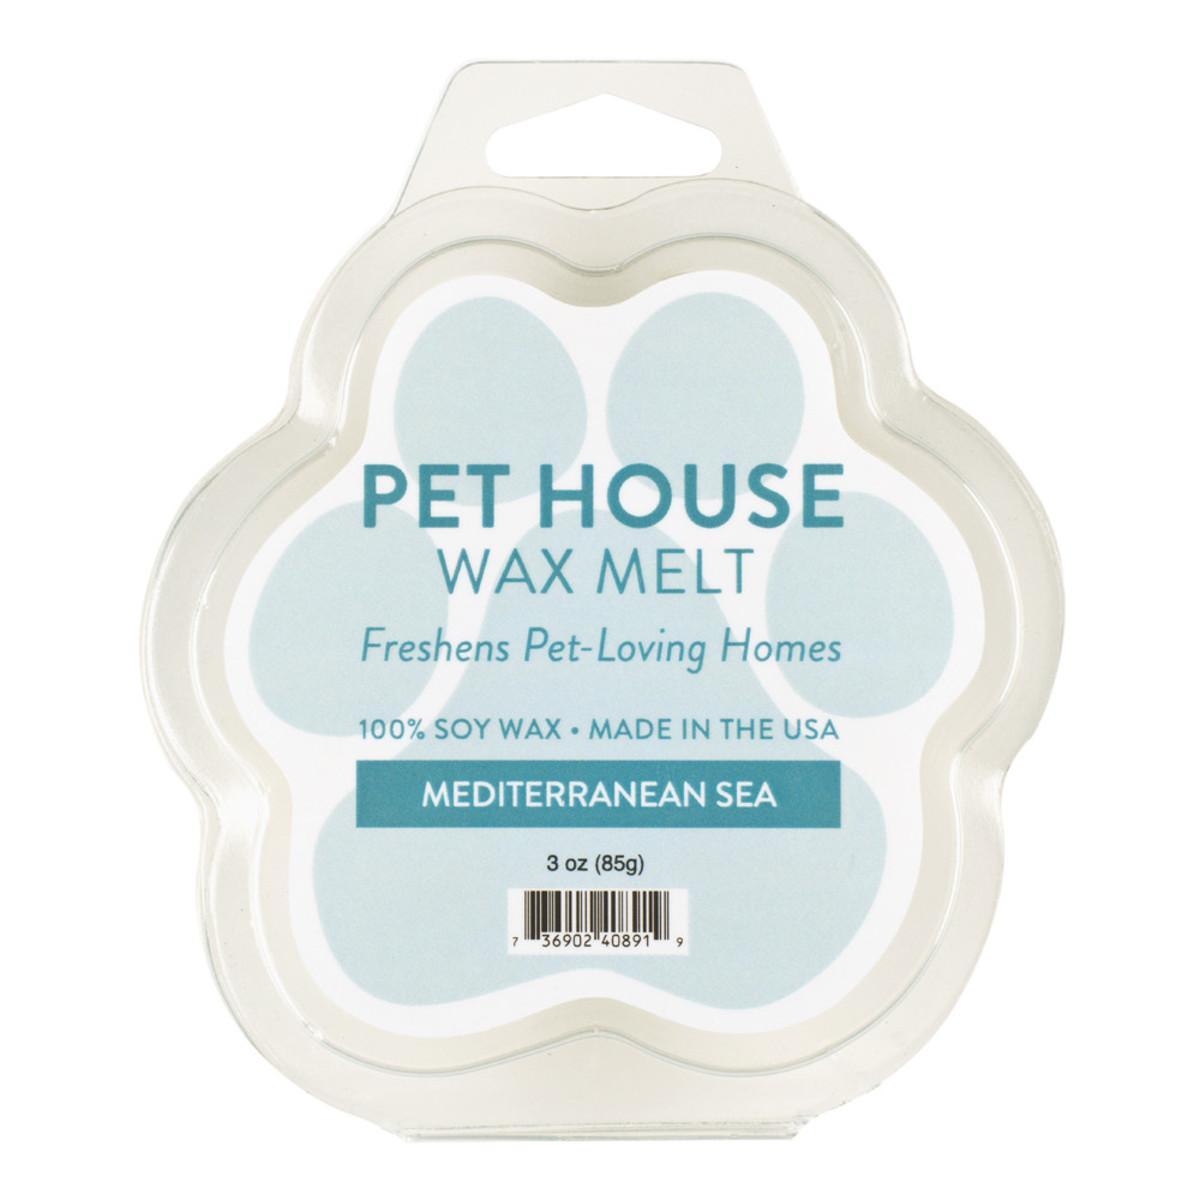 Pet House Mediterranean Sea Wax Melt